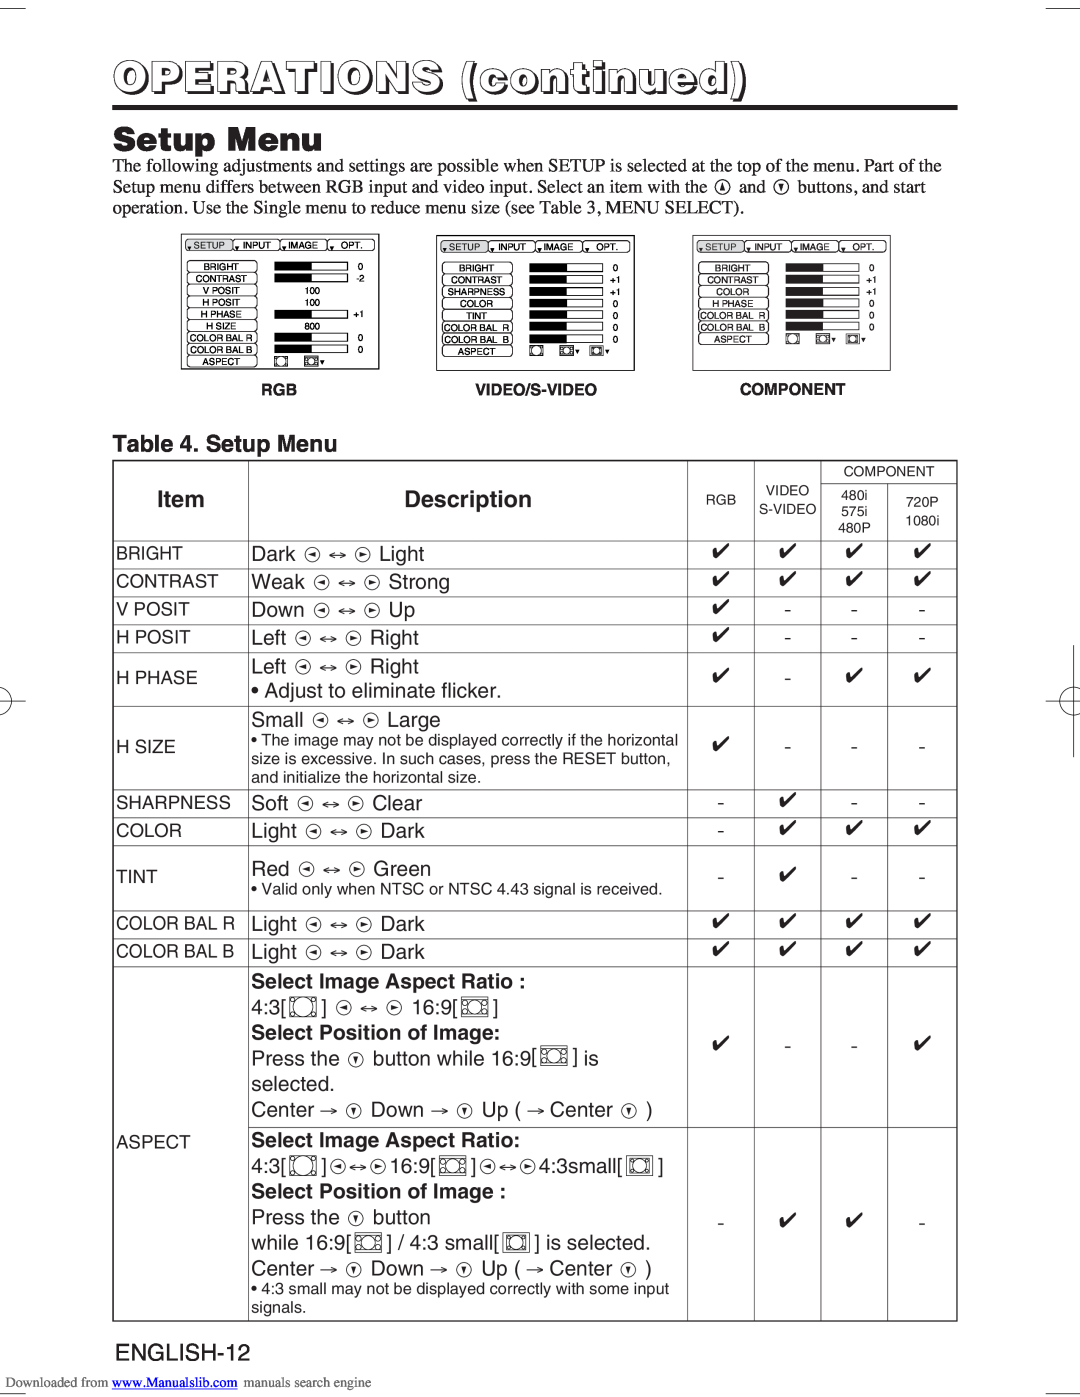 Hitachi CP-S370W Setup Menu, OPERATIONS continued, Description, Select Image Aspect Ratio, Select Position of Image 